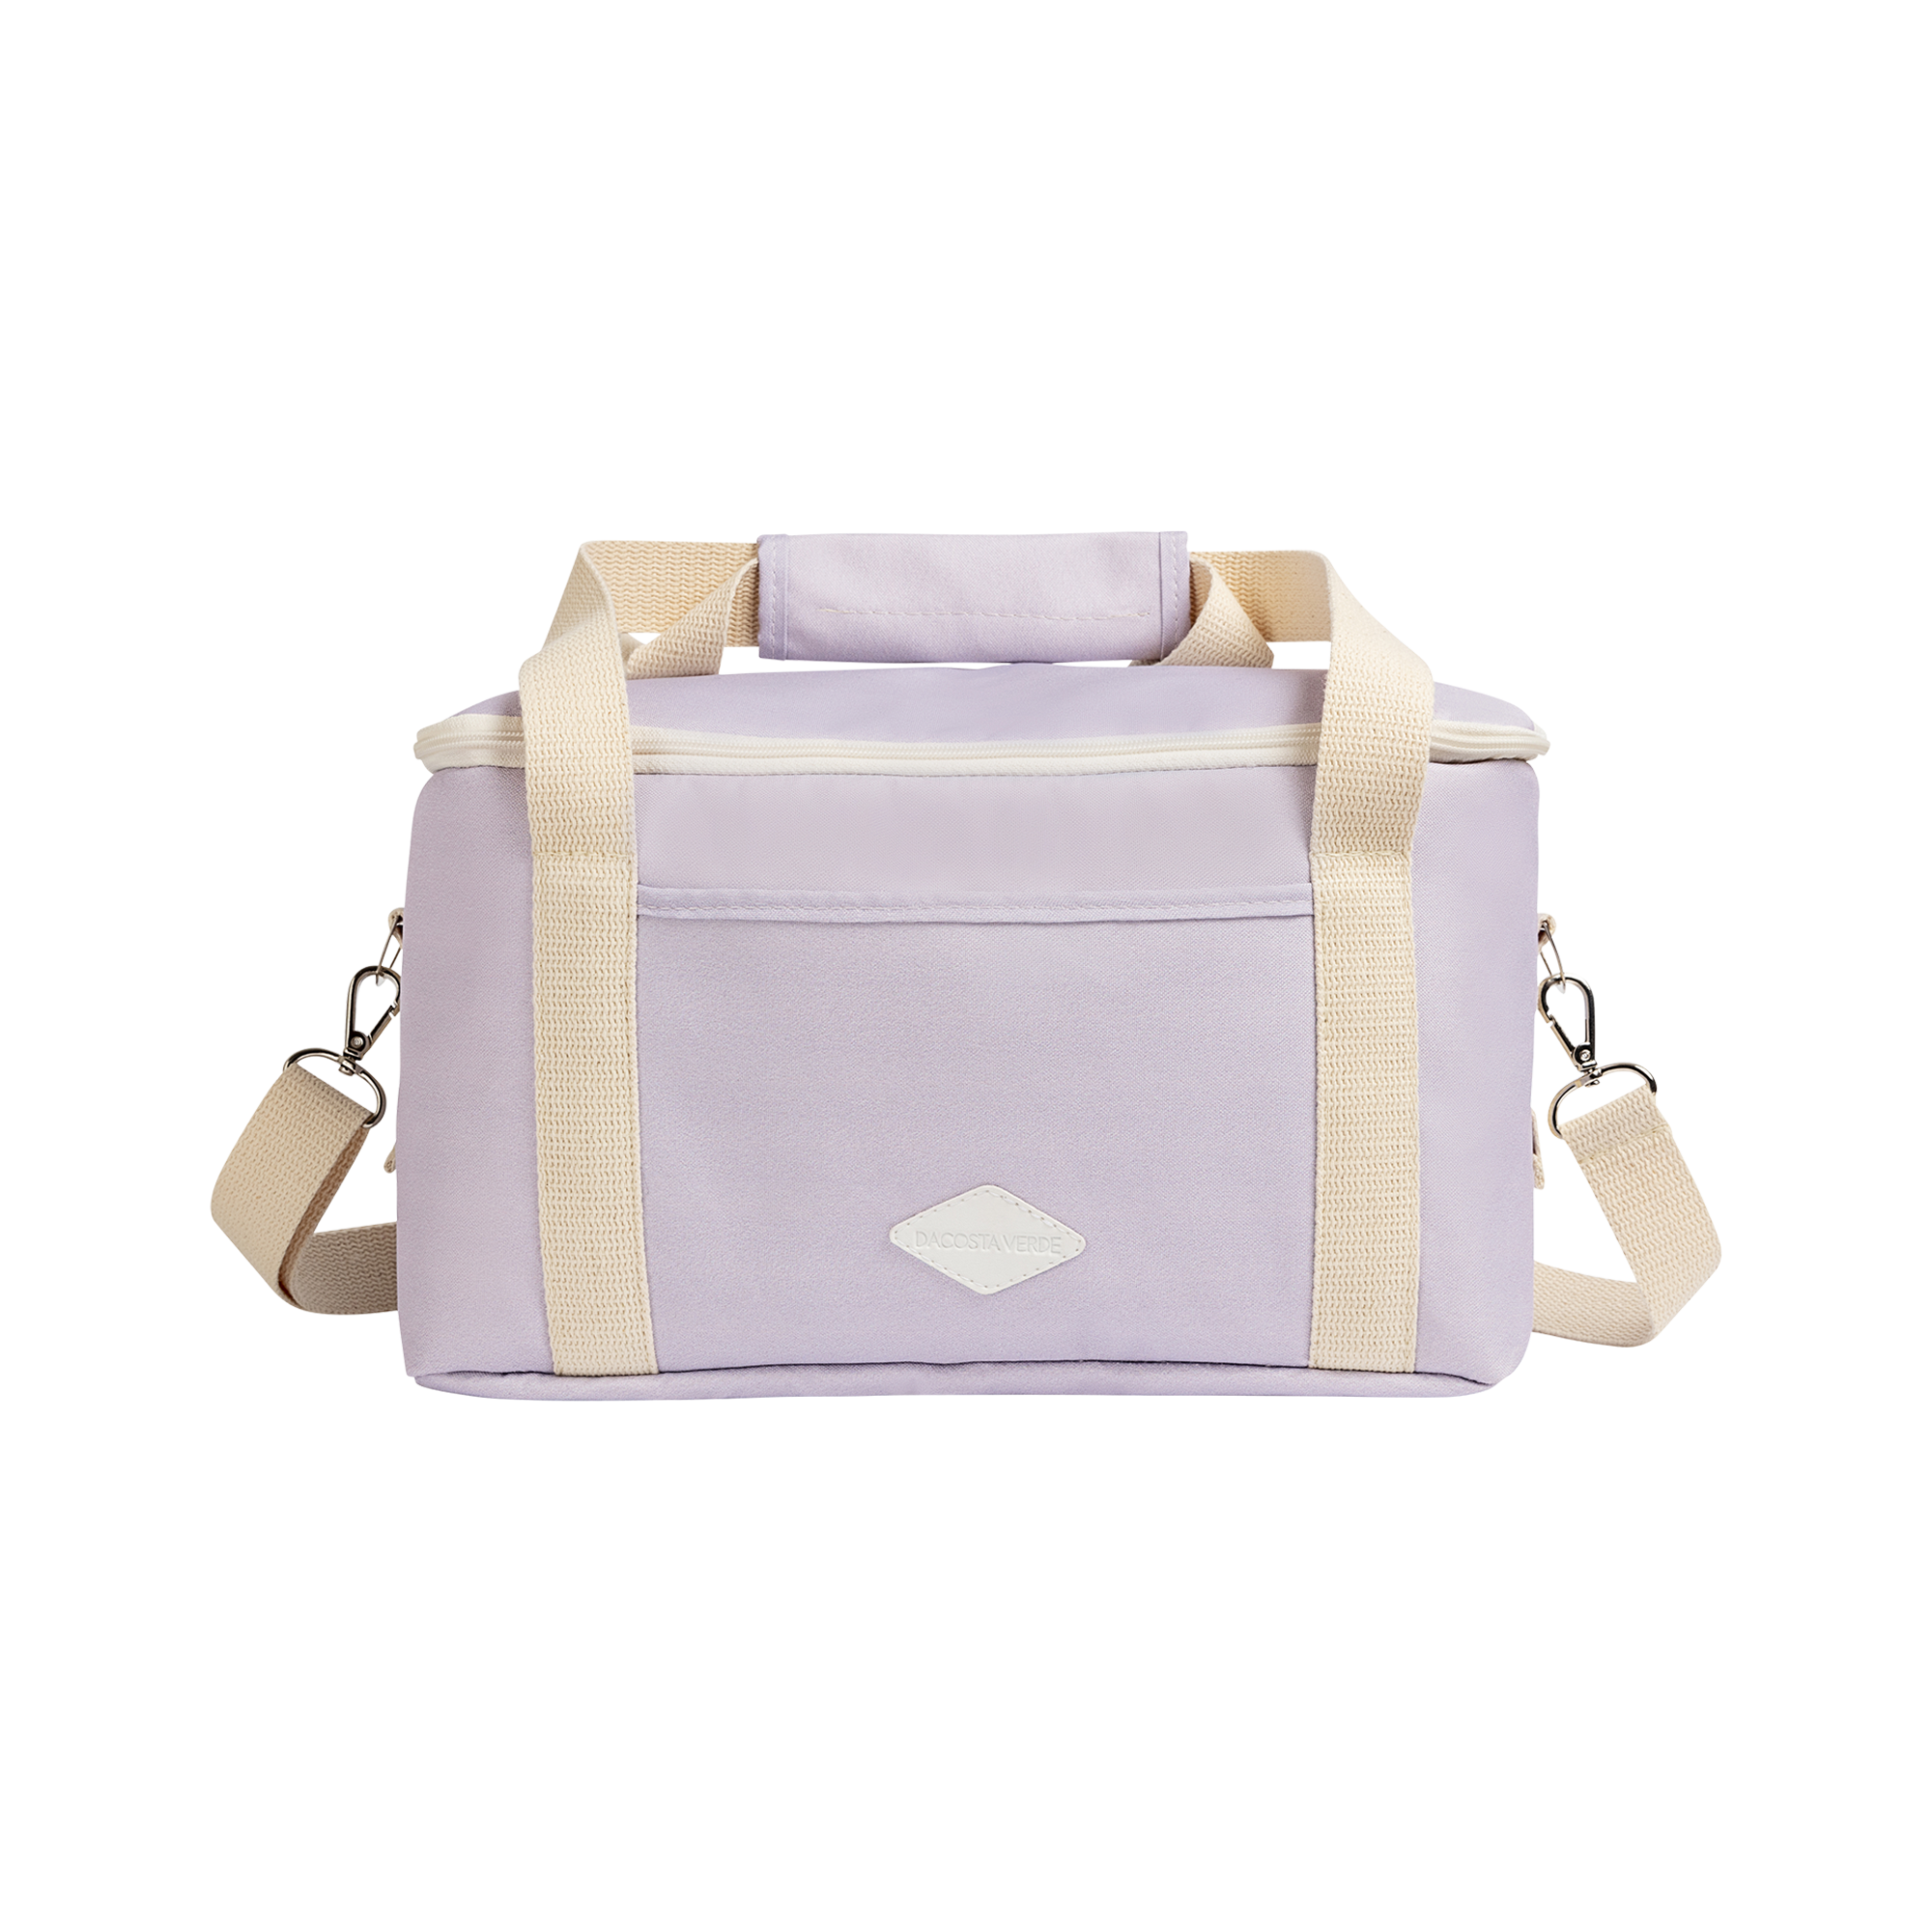 dreamy lilac handbag